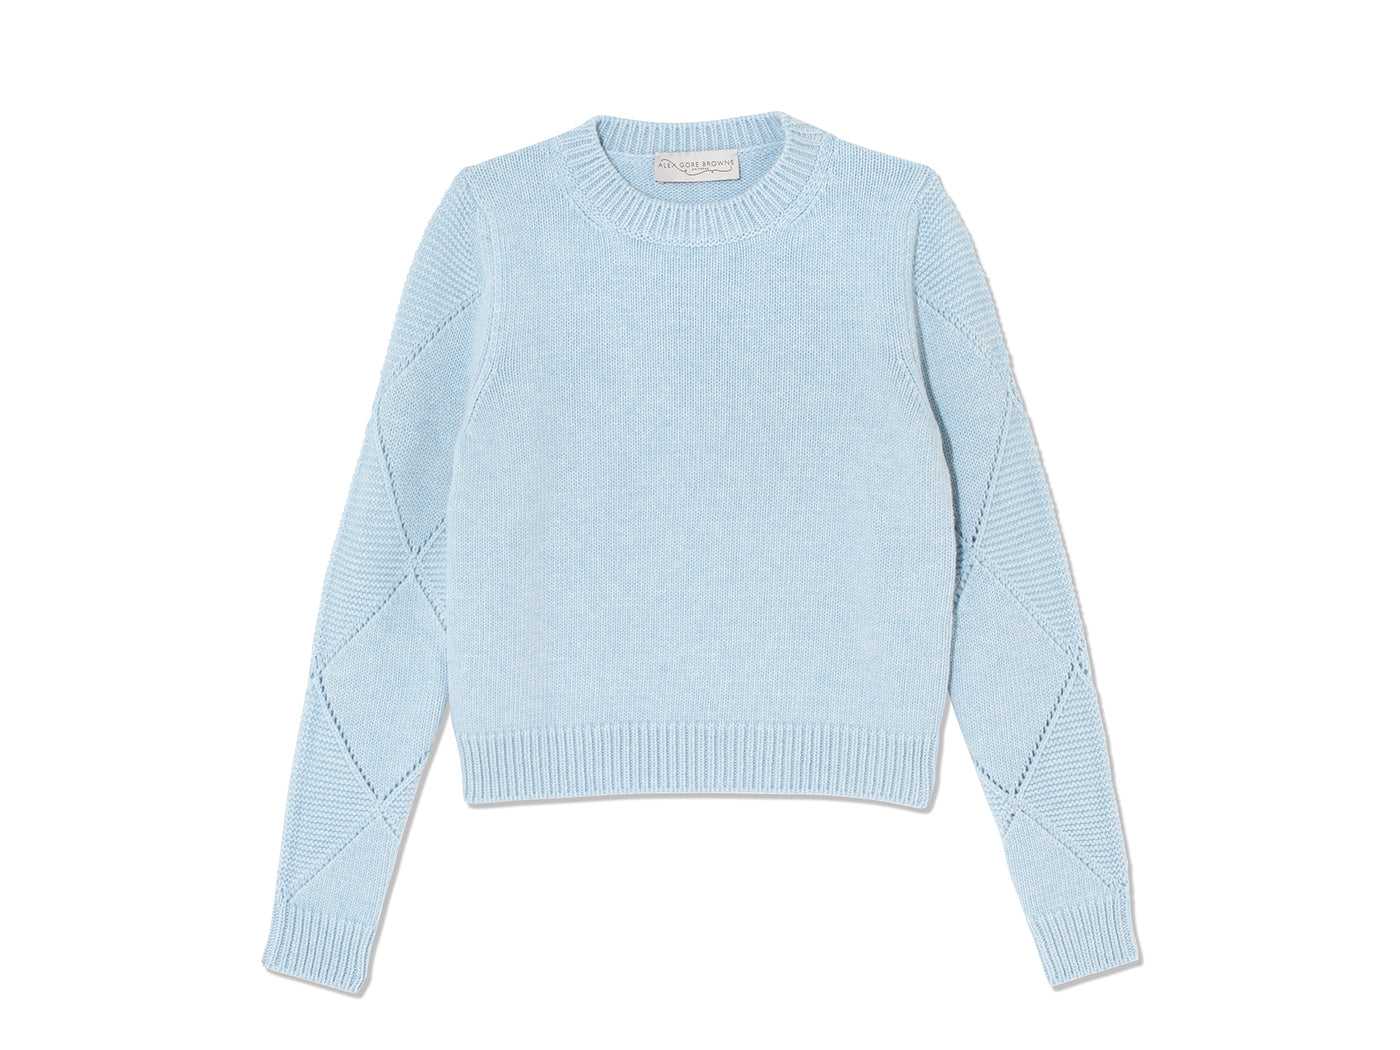 Harlequin Sweater - Washed Denim